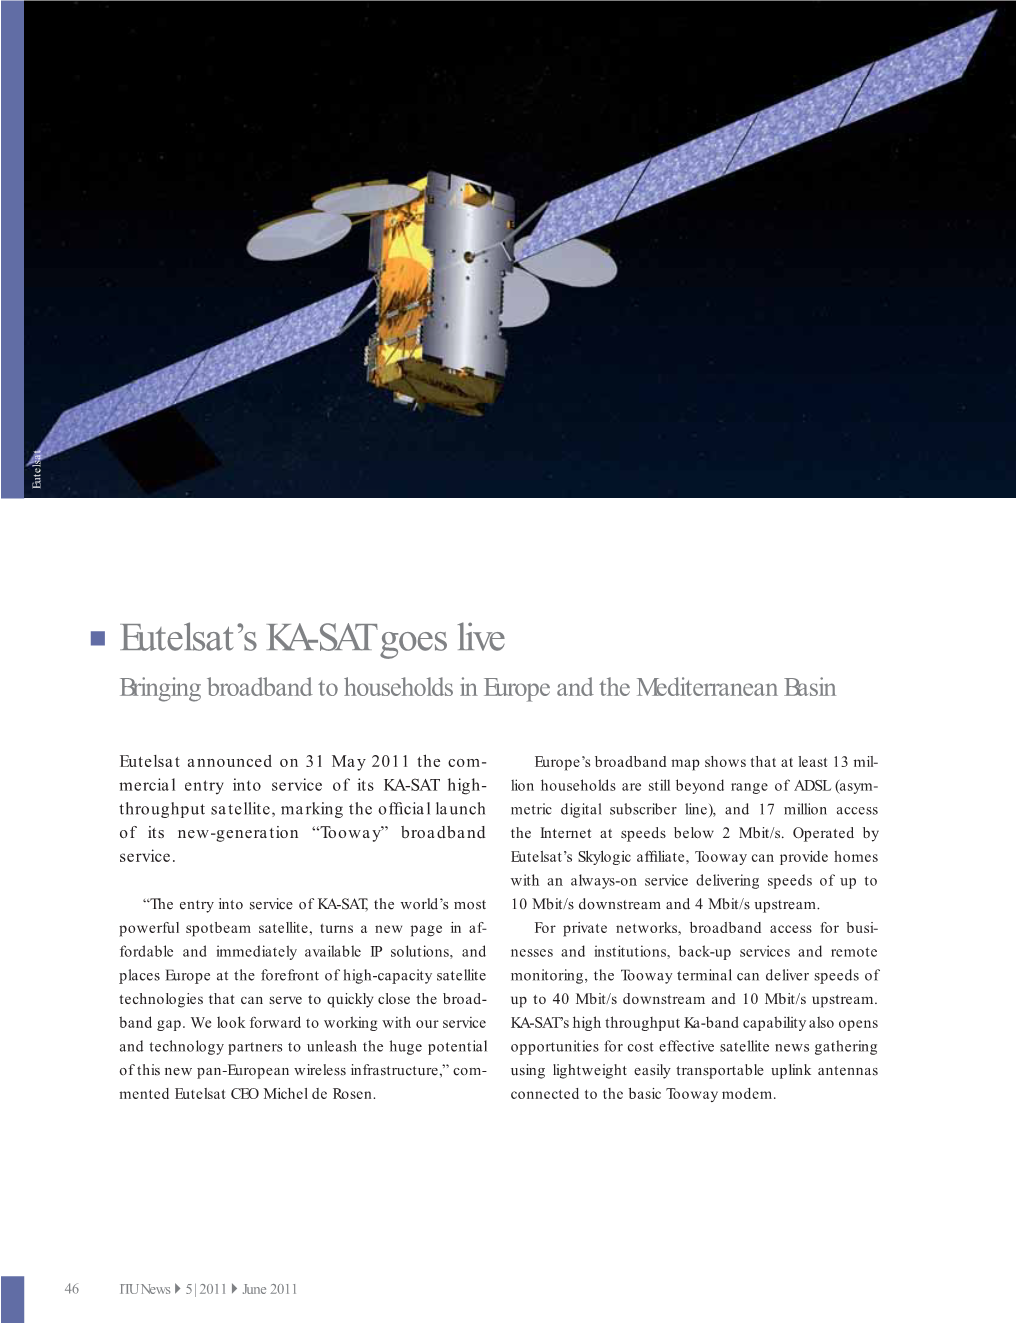 Eutelsat's KA-SAT Goes Live